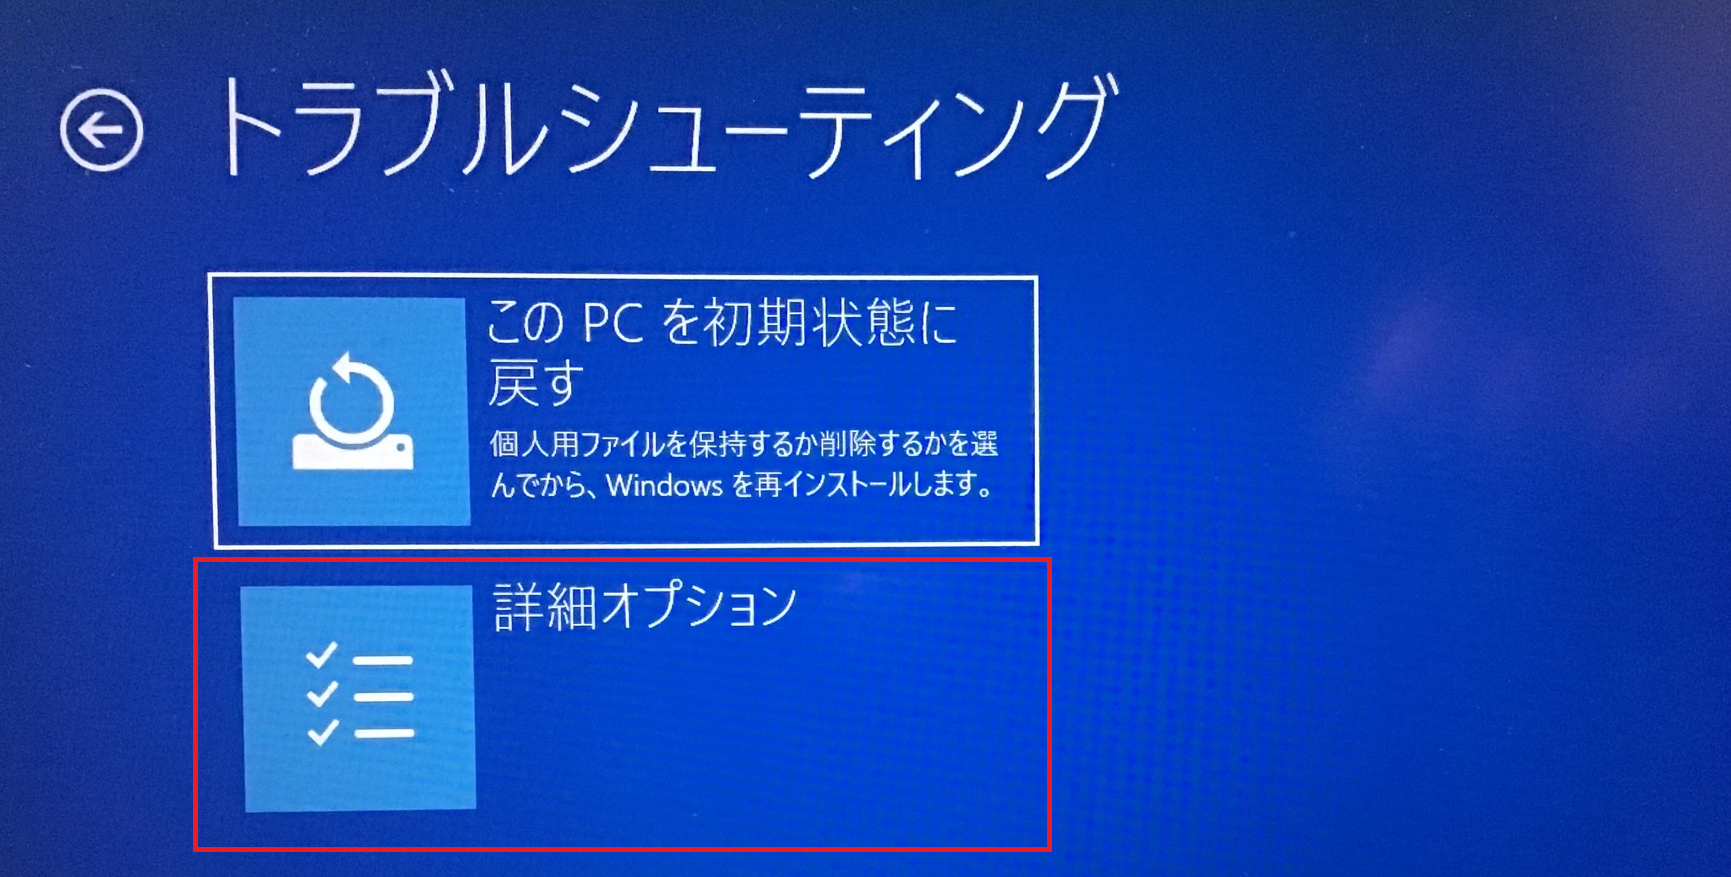 Windows:「詳細オプション」を選択